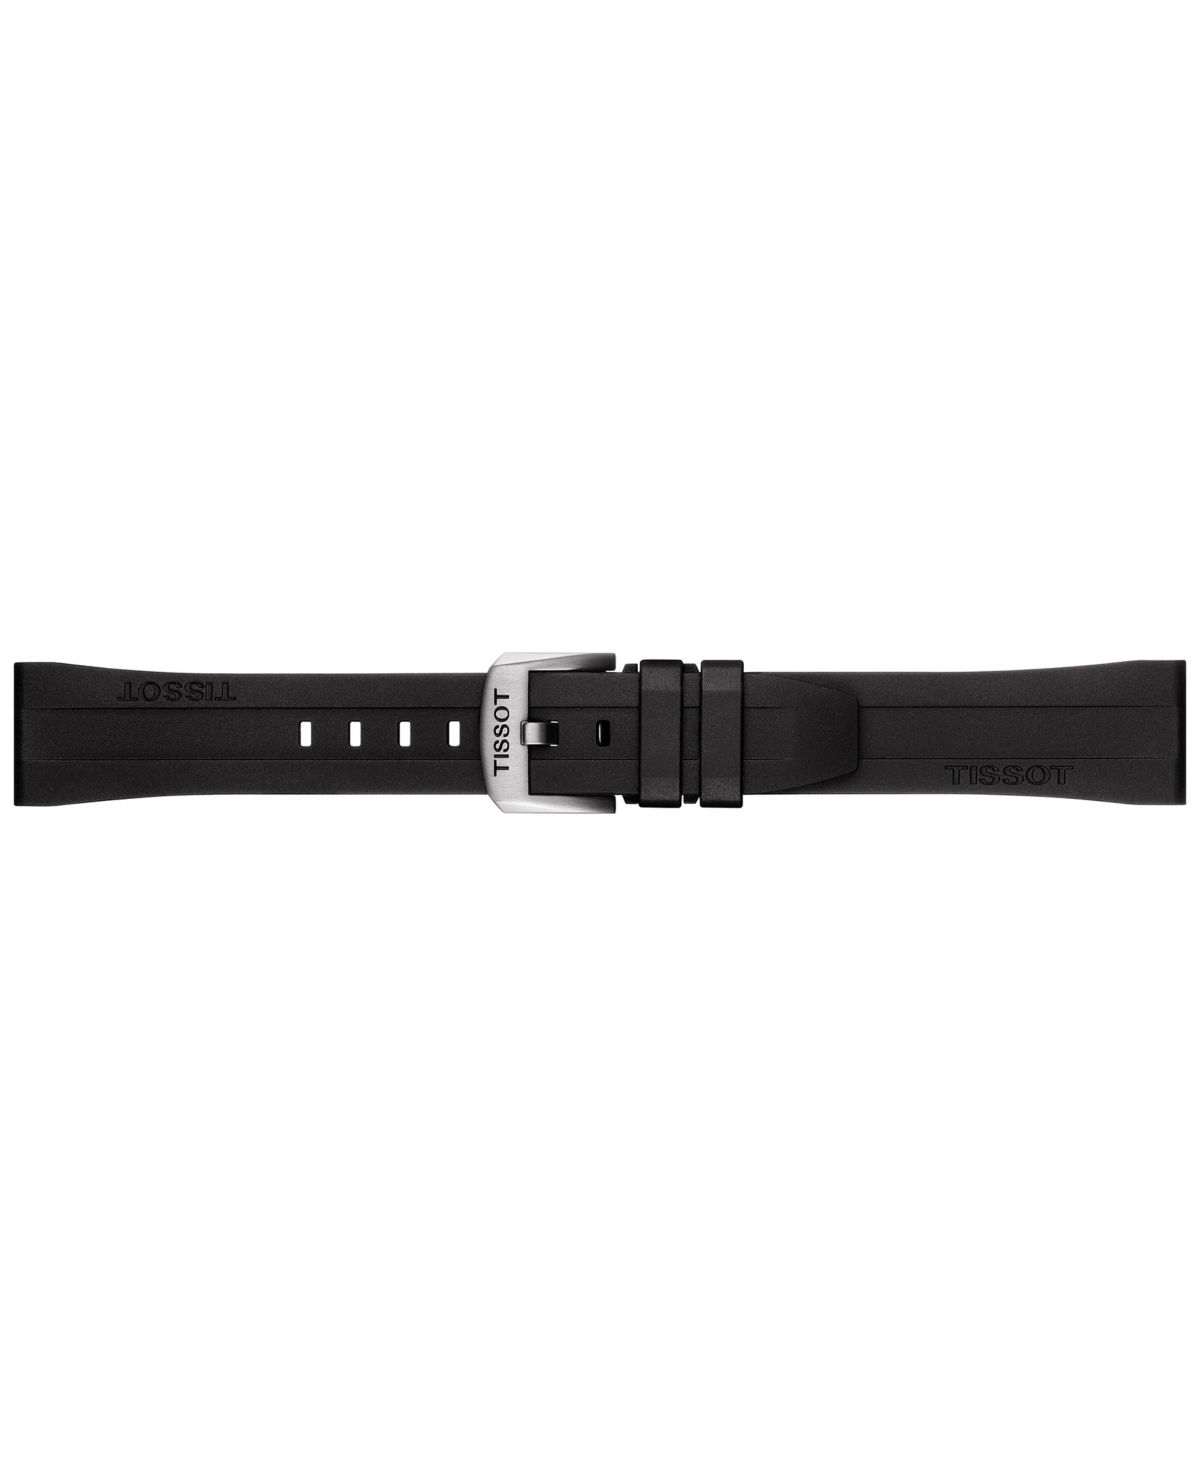 Shop Tissot Men's Swiss Chronograph Prc 200 Black Rubber Strap Watch 43mm